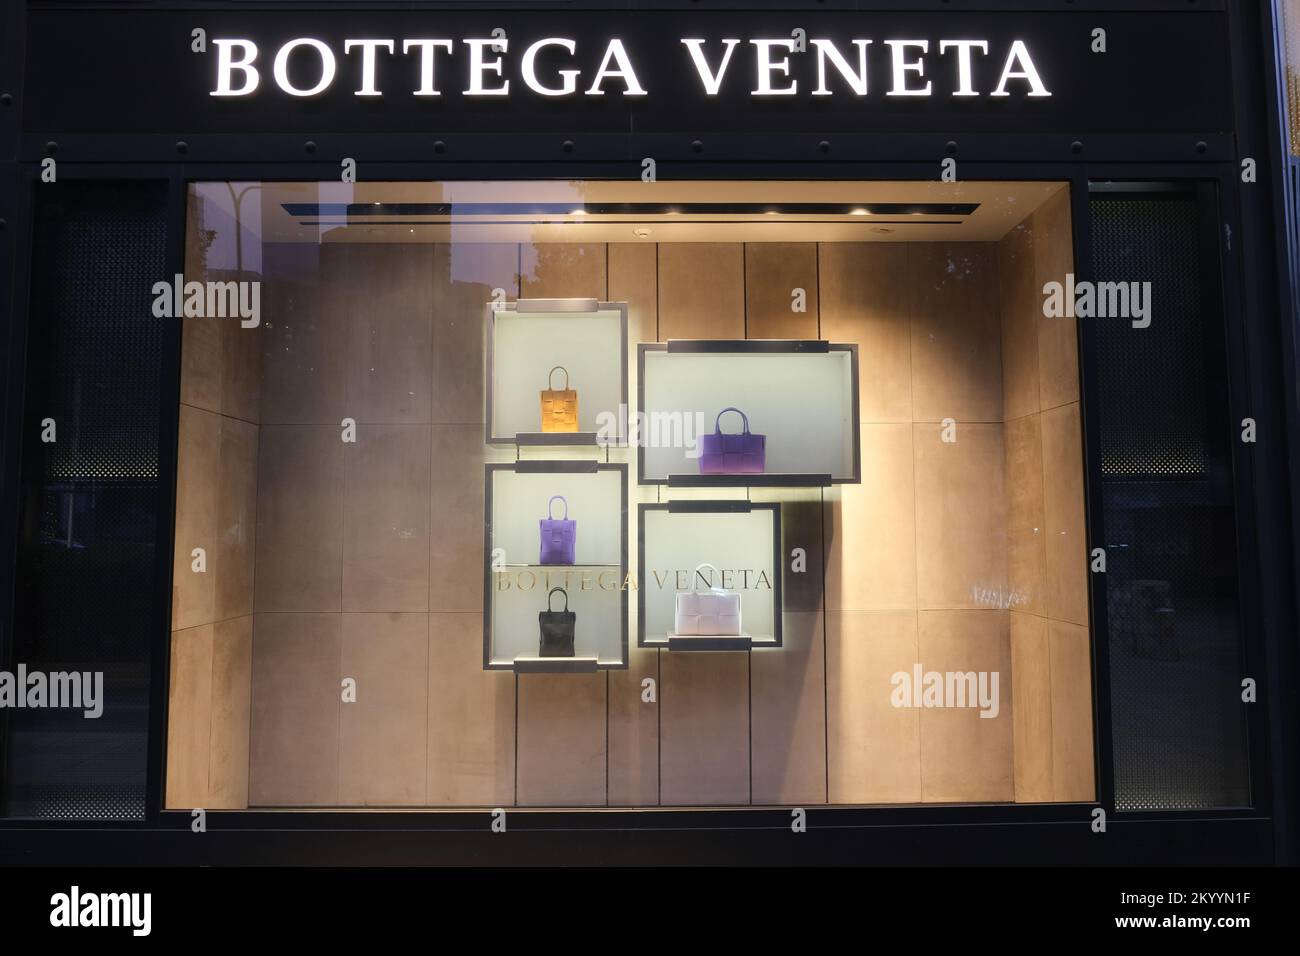 Bottega Veneta, An Italian luxury fashion house